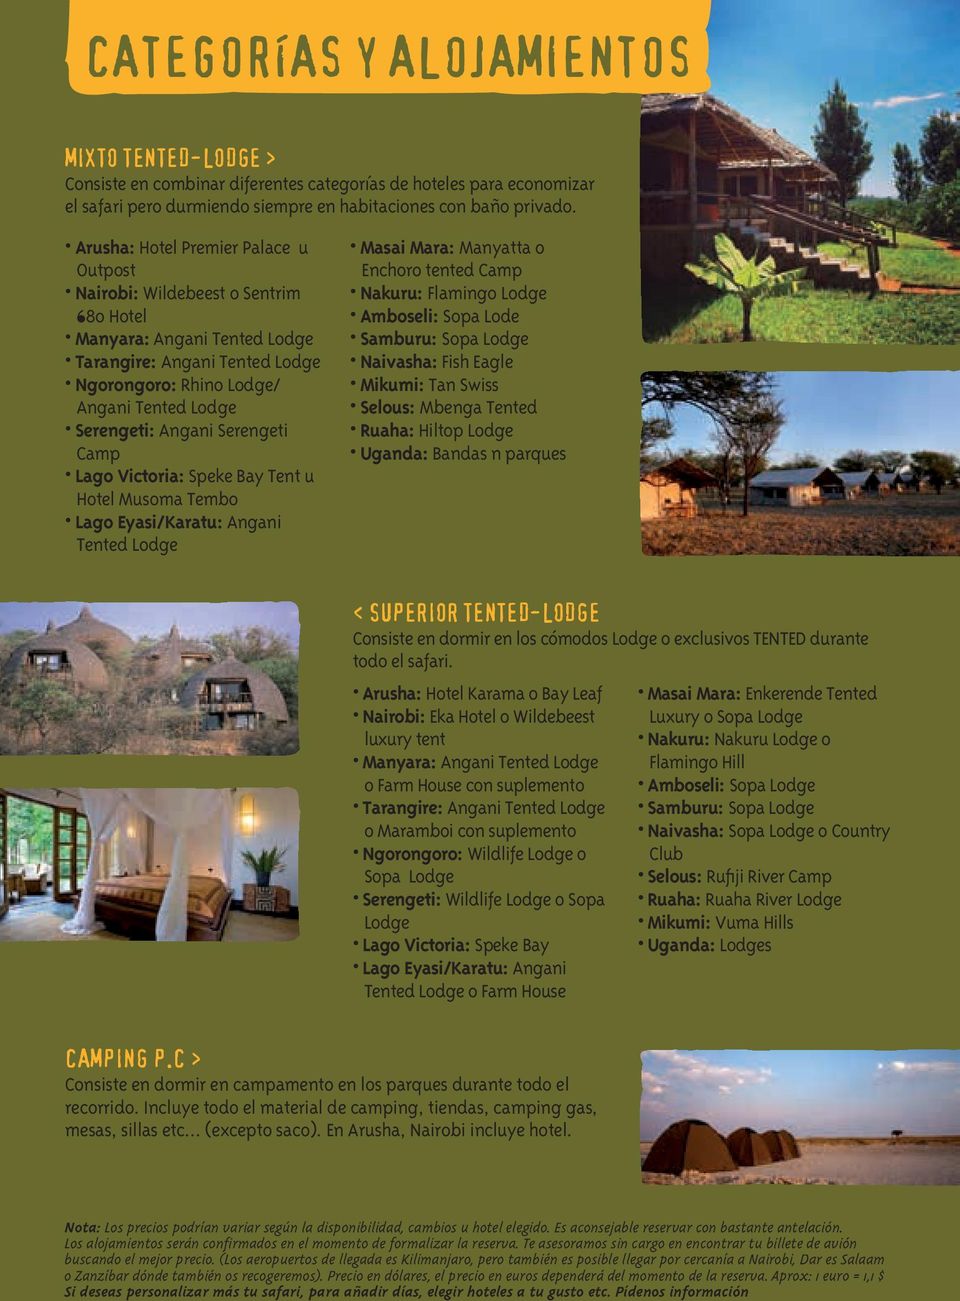 Angani Serengeti Camp Lago Victoria: Speke Bay Tent u Hotel Musoma Tembo Lago Eyasi/Karatu: Angani Tented Lodge Masai Mara: Manyatta o Enchoro tented Camp Nakuru: Flamingo Lodge Amboseli: Sopa Lode